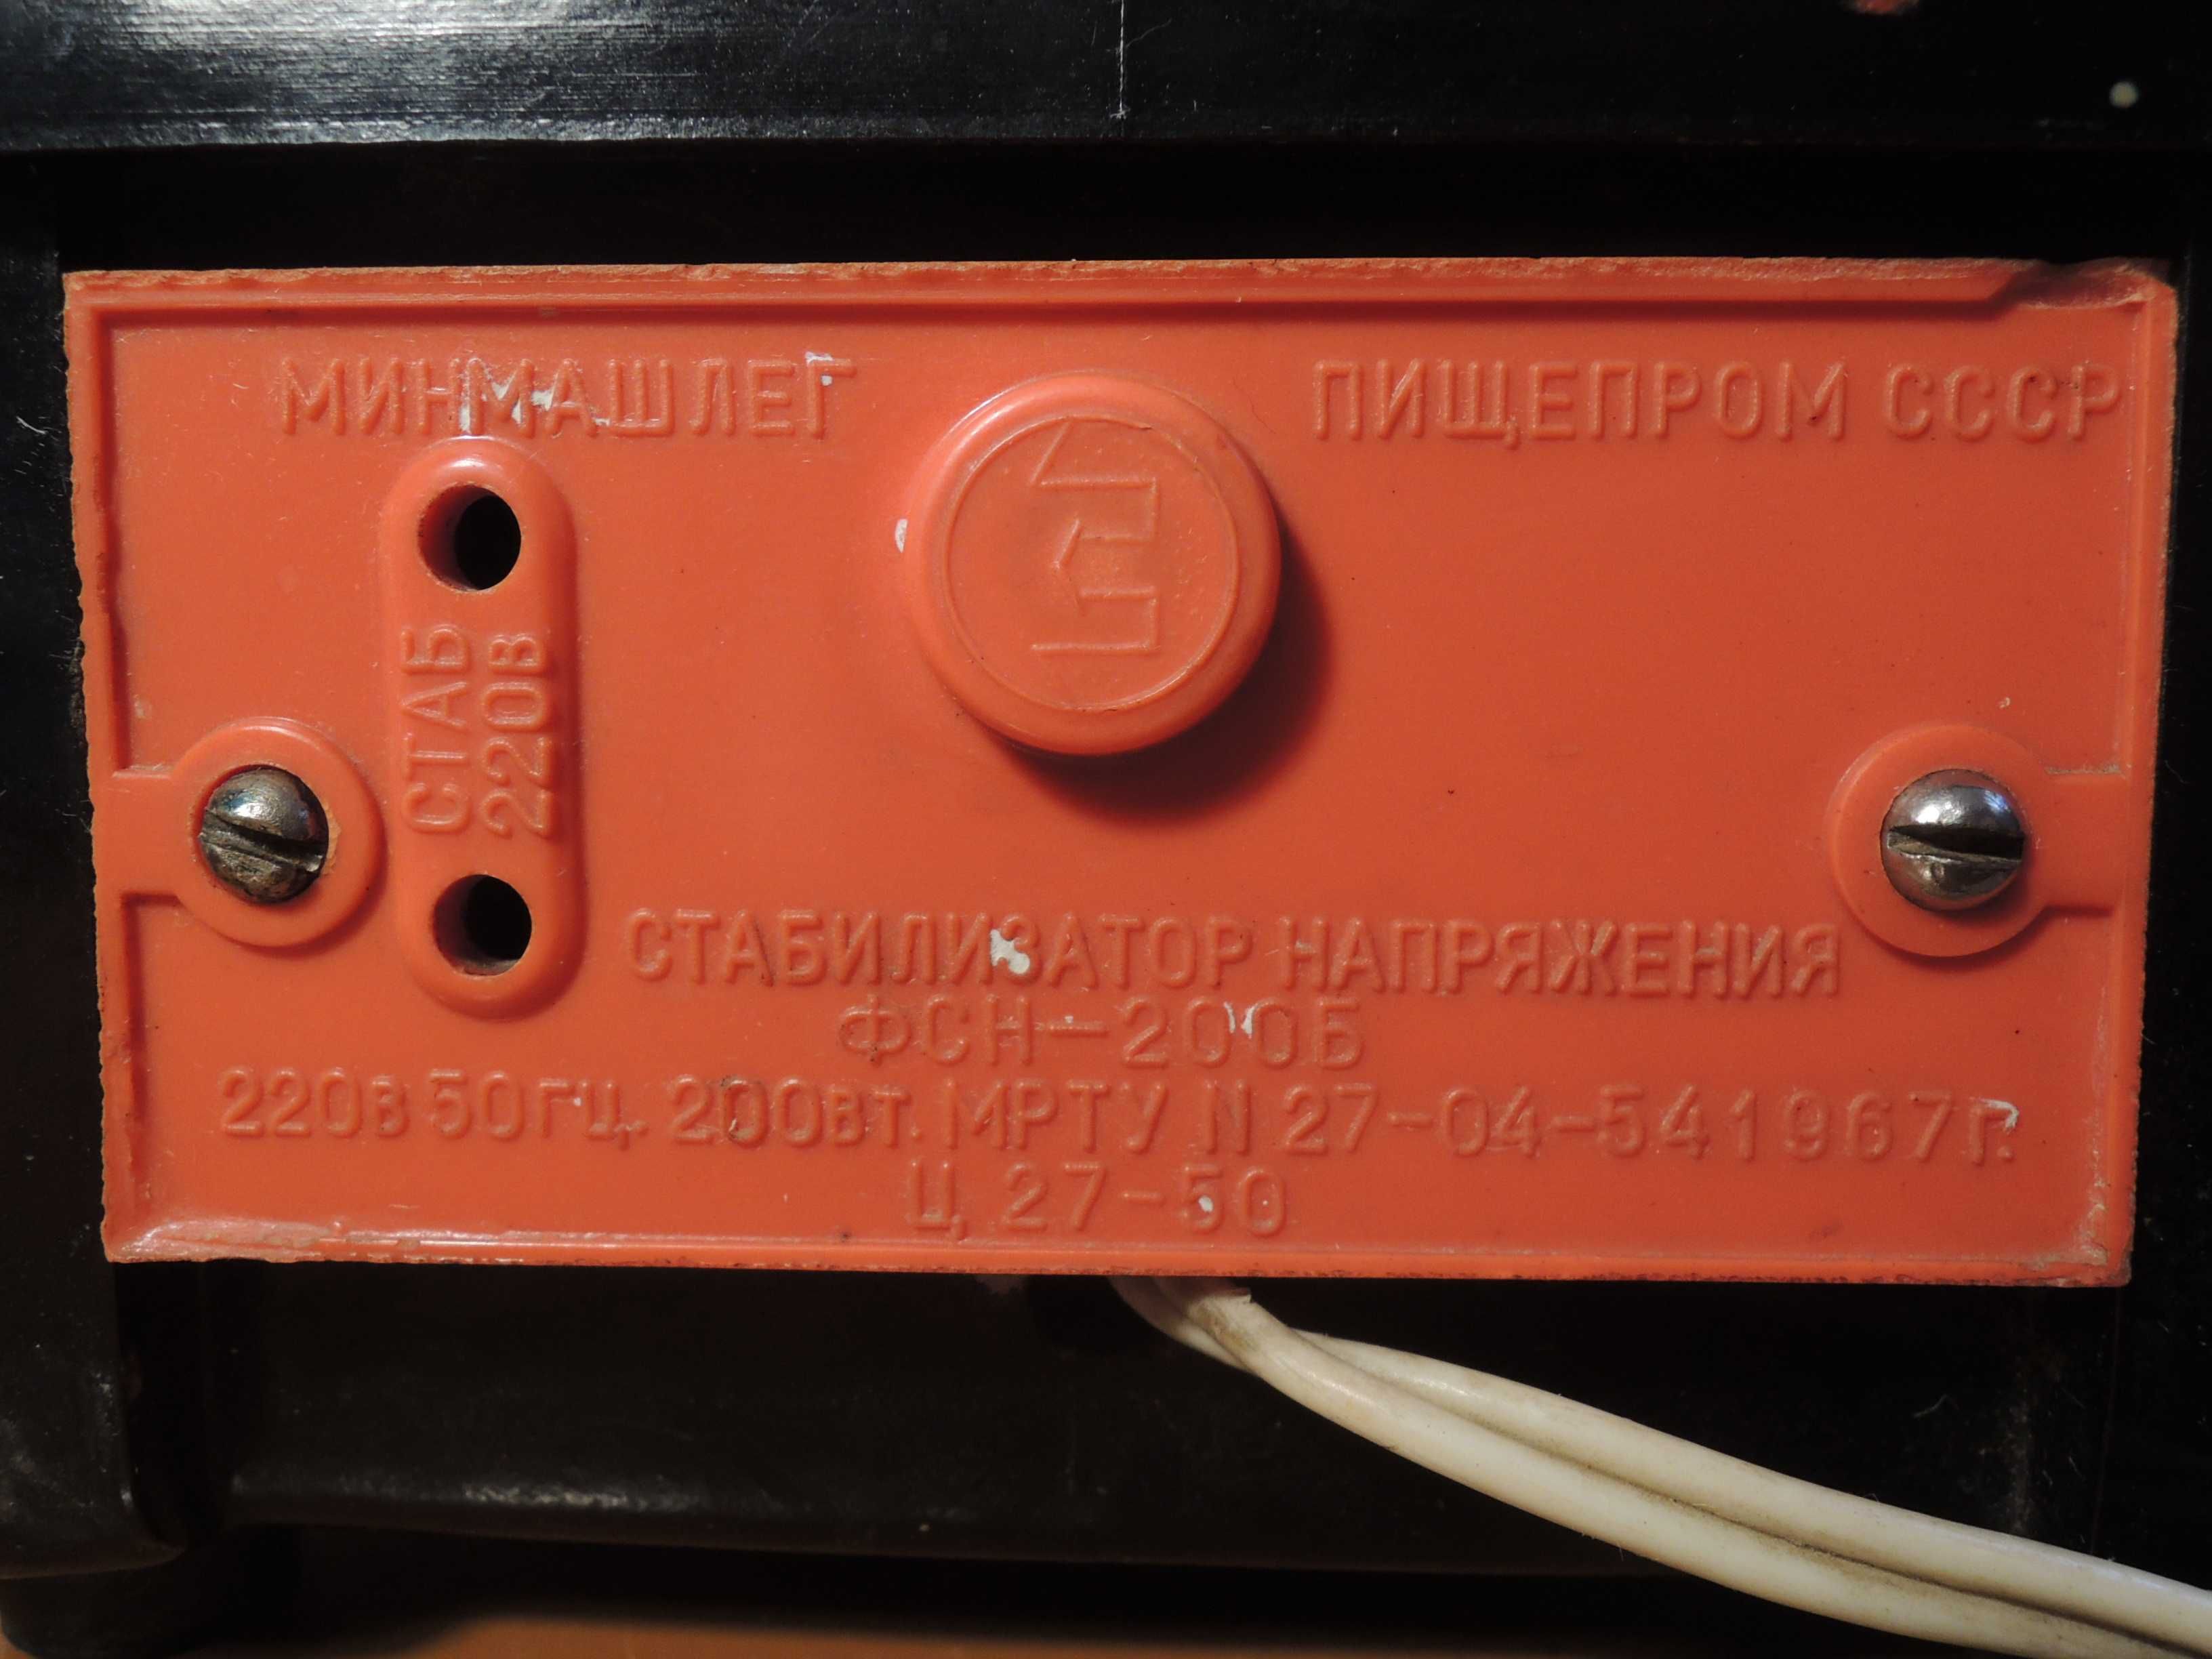 Стабилизатор ФСН-200Б, сделано в СССР